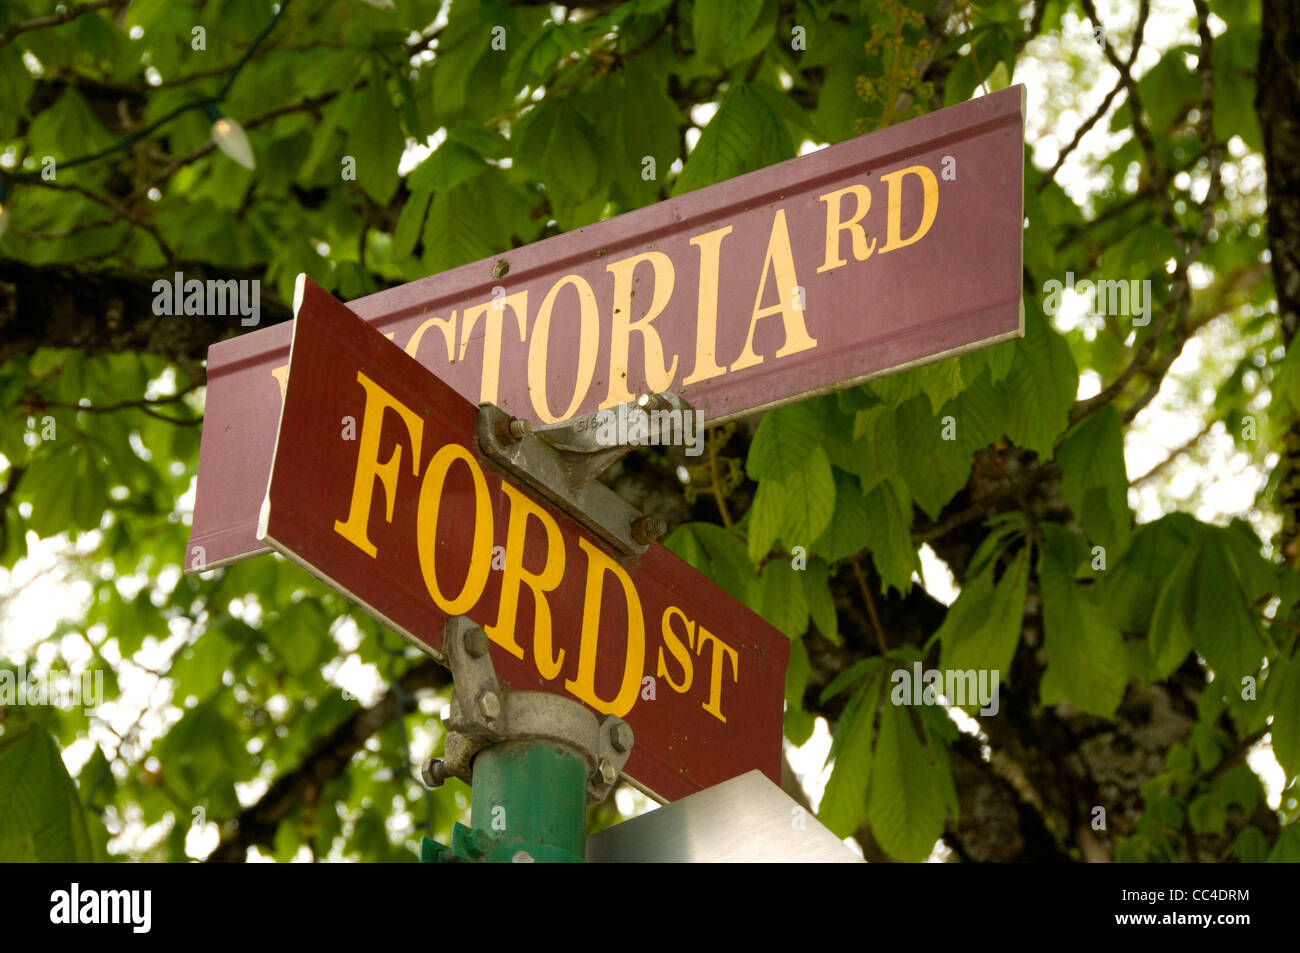 Ford Street, Revelstoke, British Columbia, Canada Stock Photo